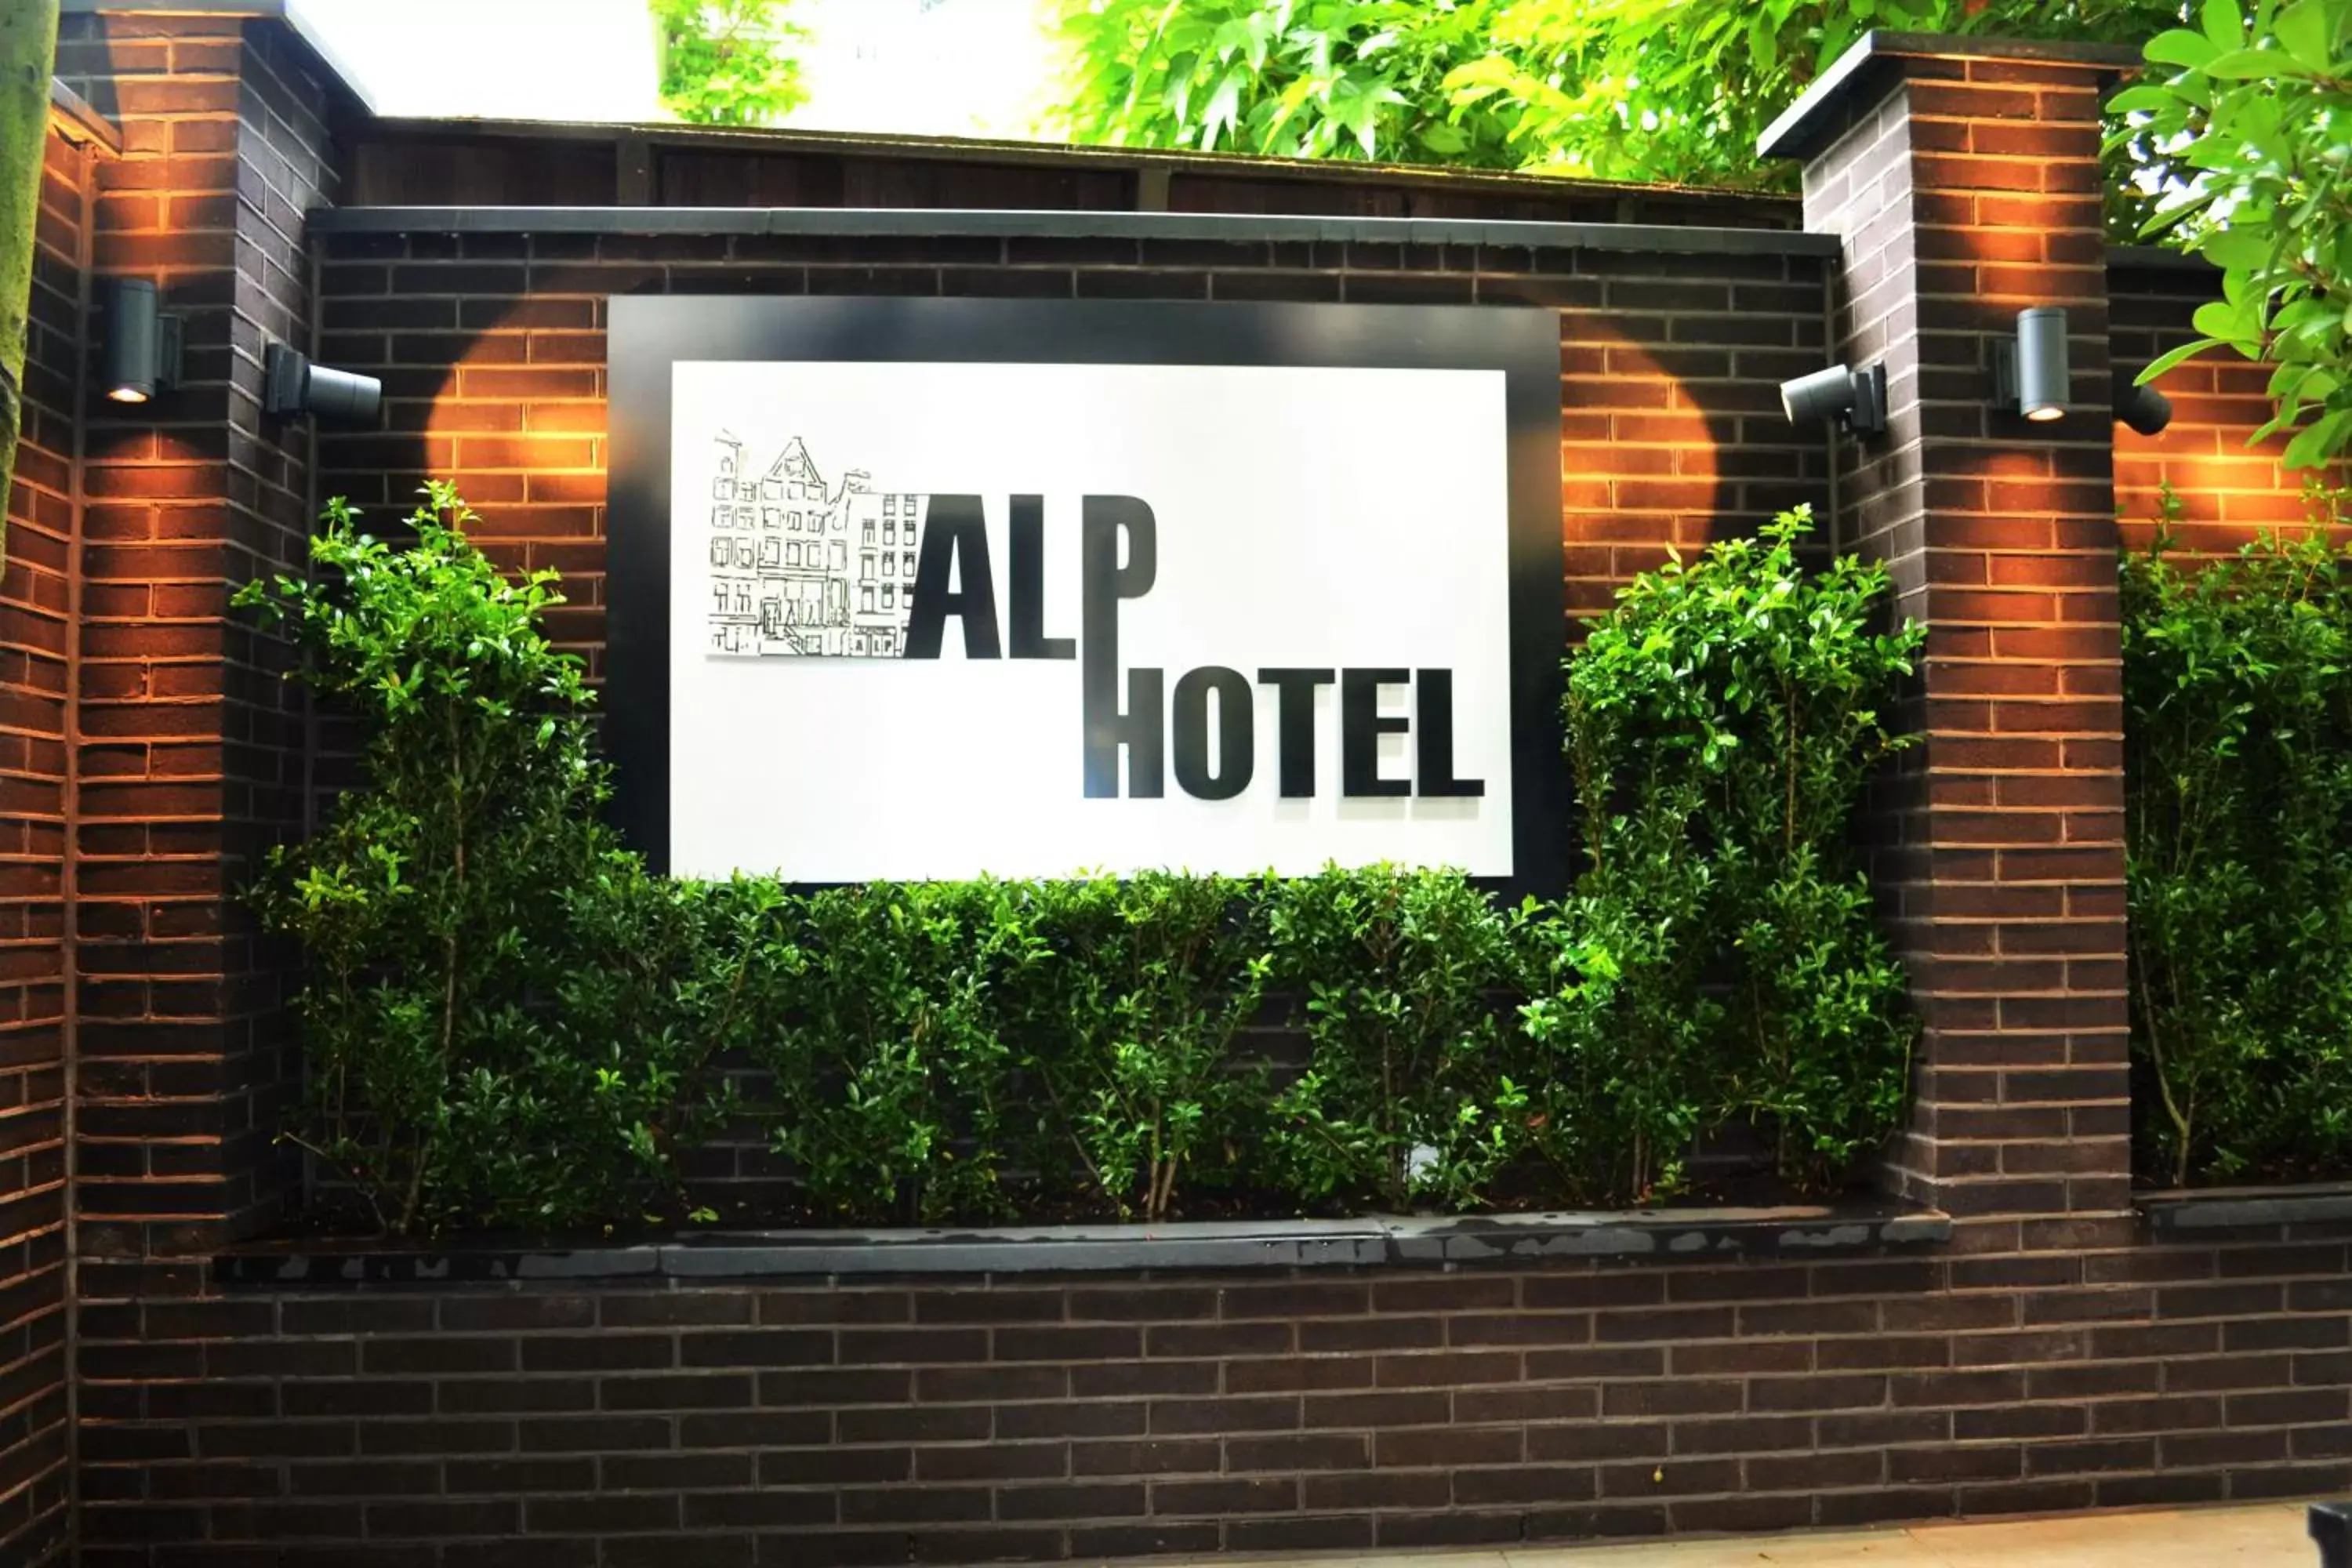 Property logo or sign in Alp Hotel